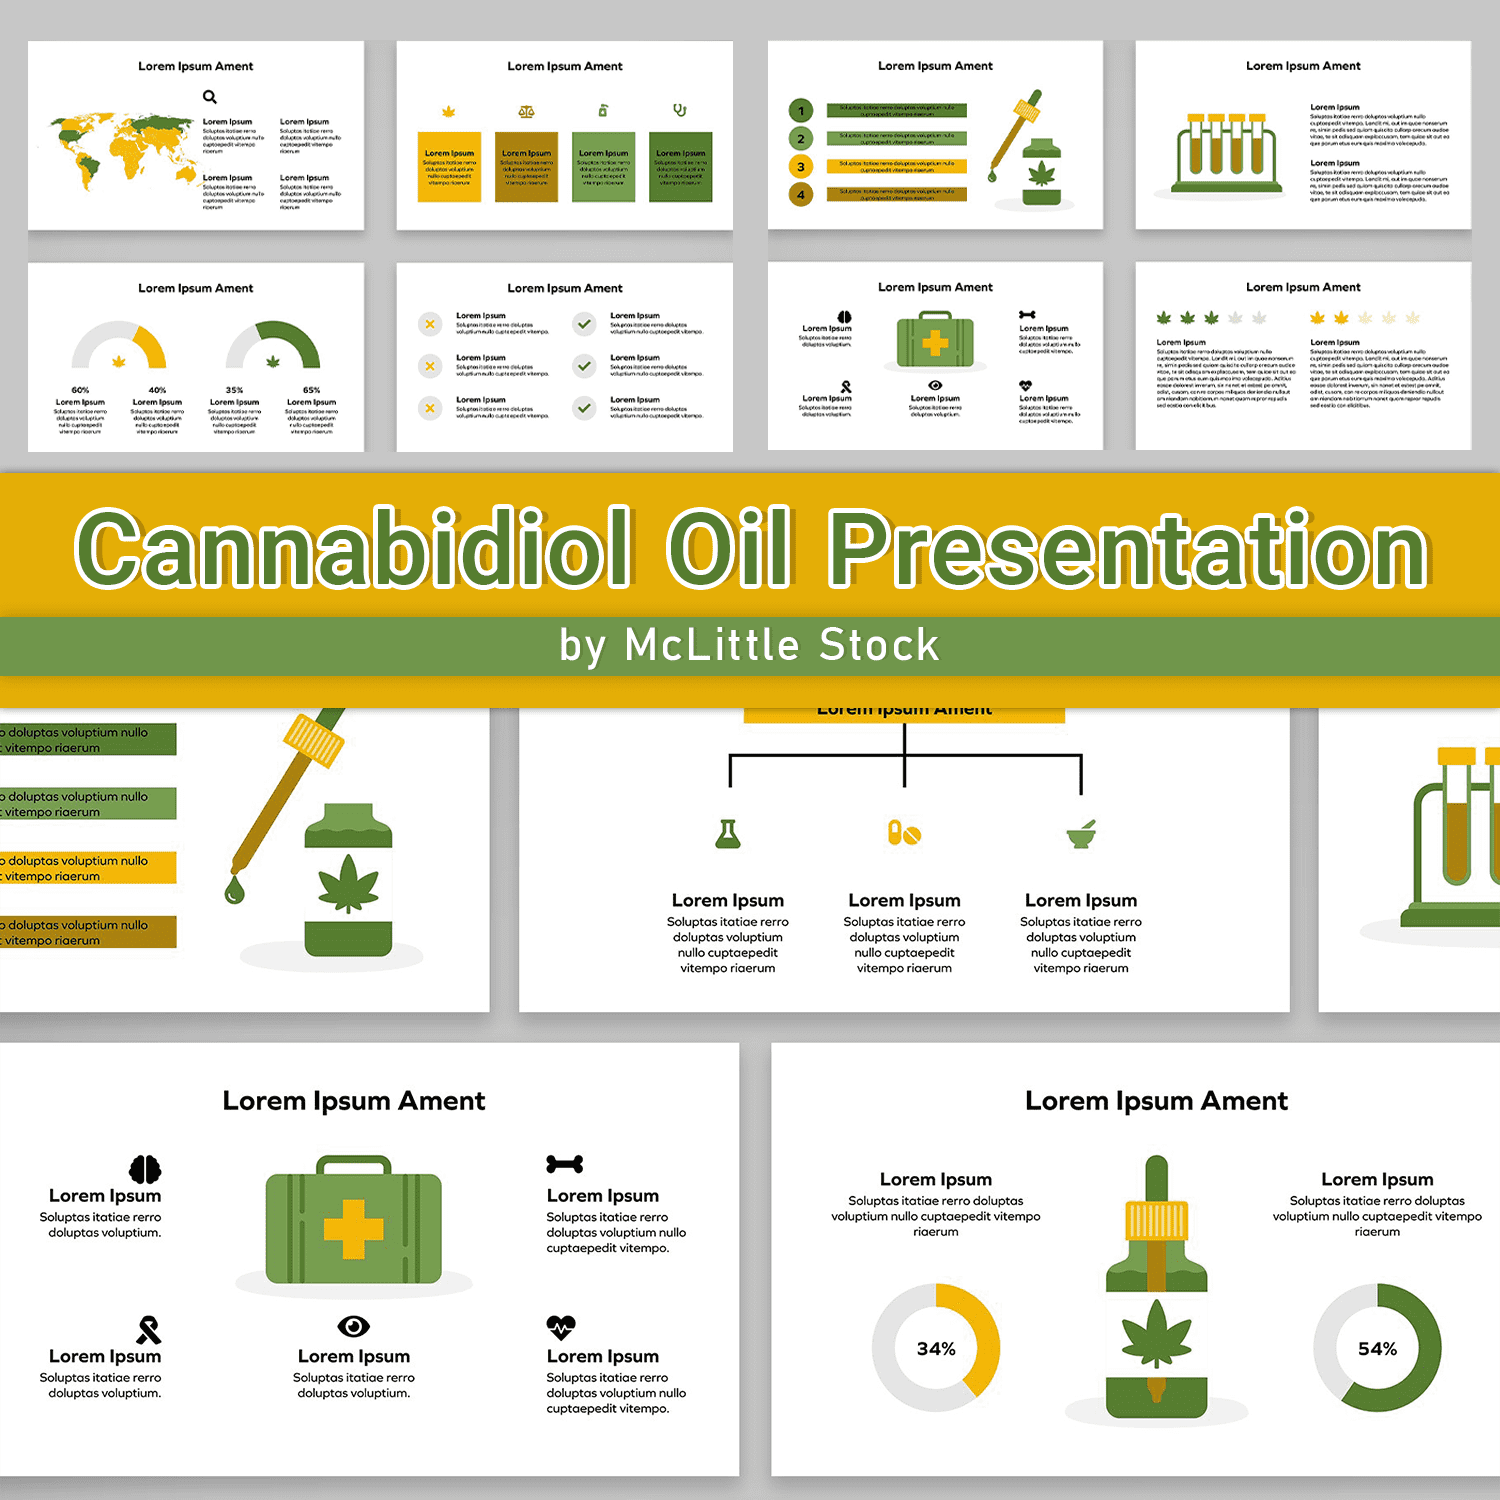 Cannabidiol Oil Presentation cover.